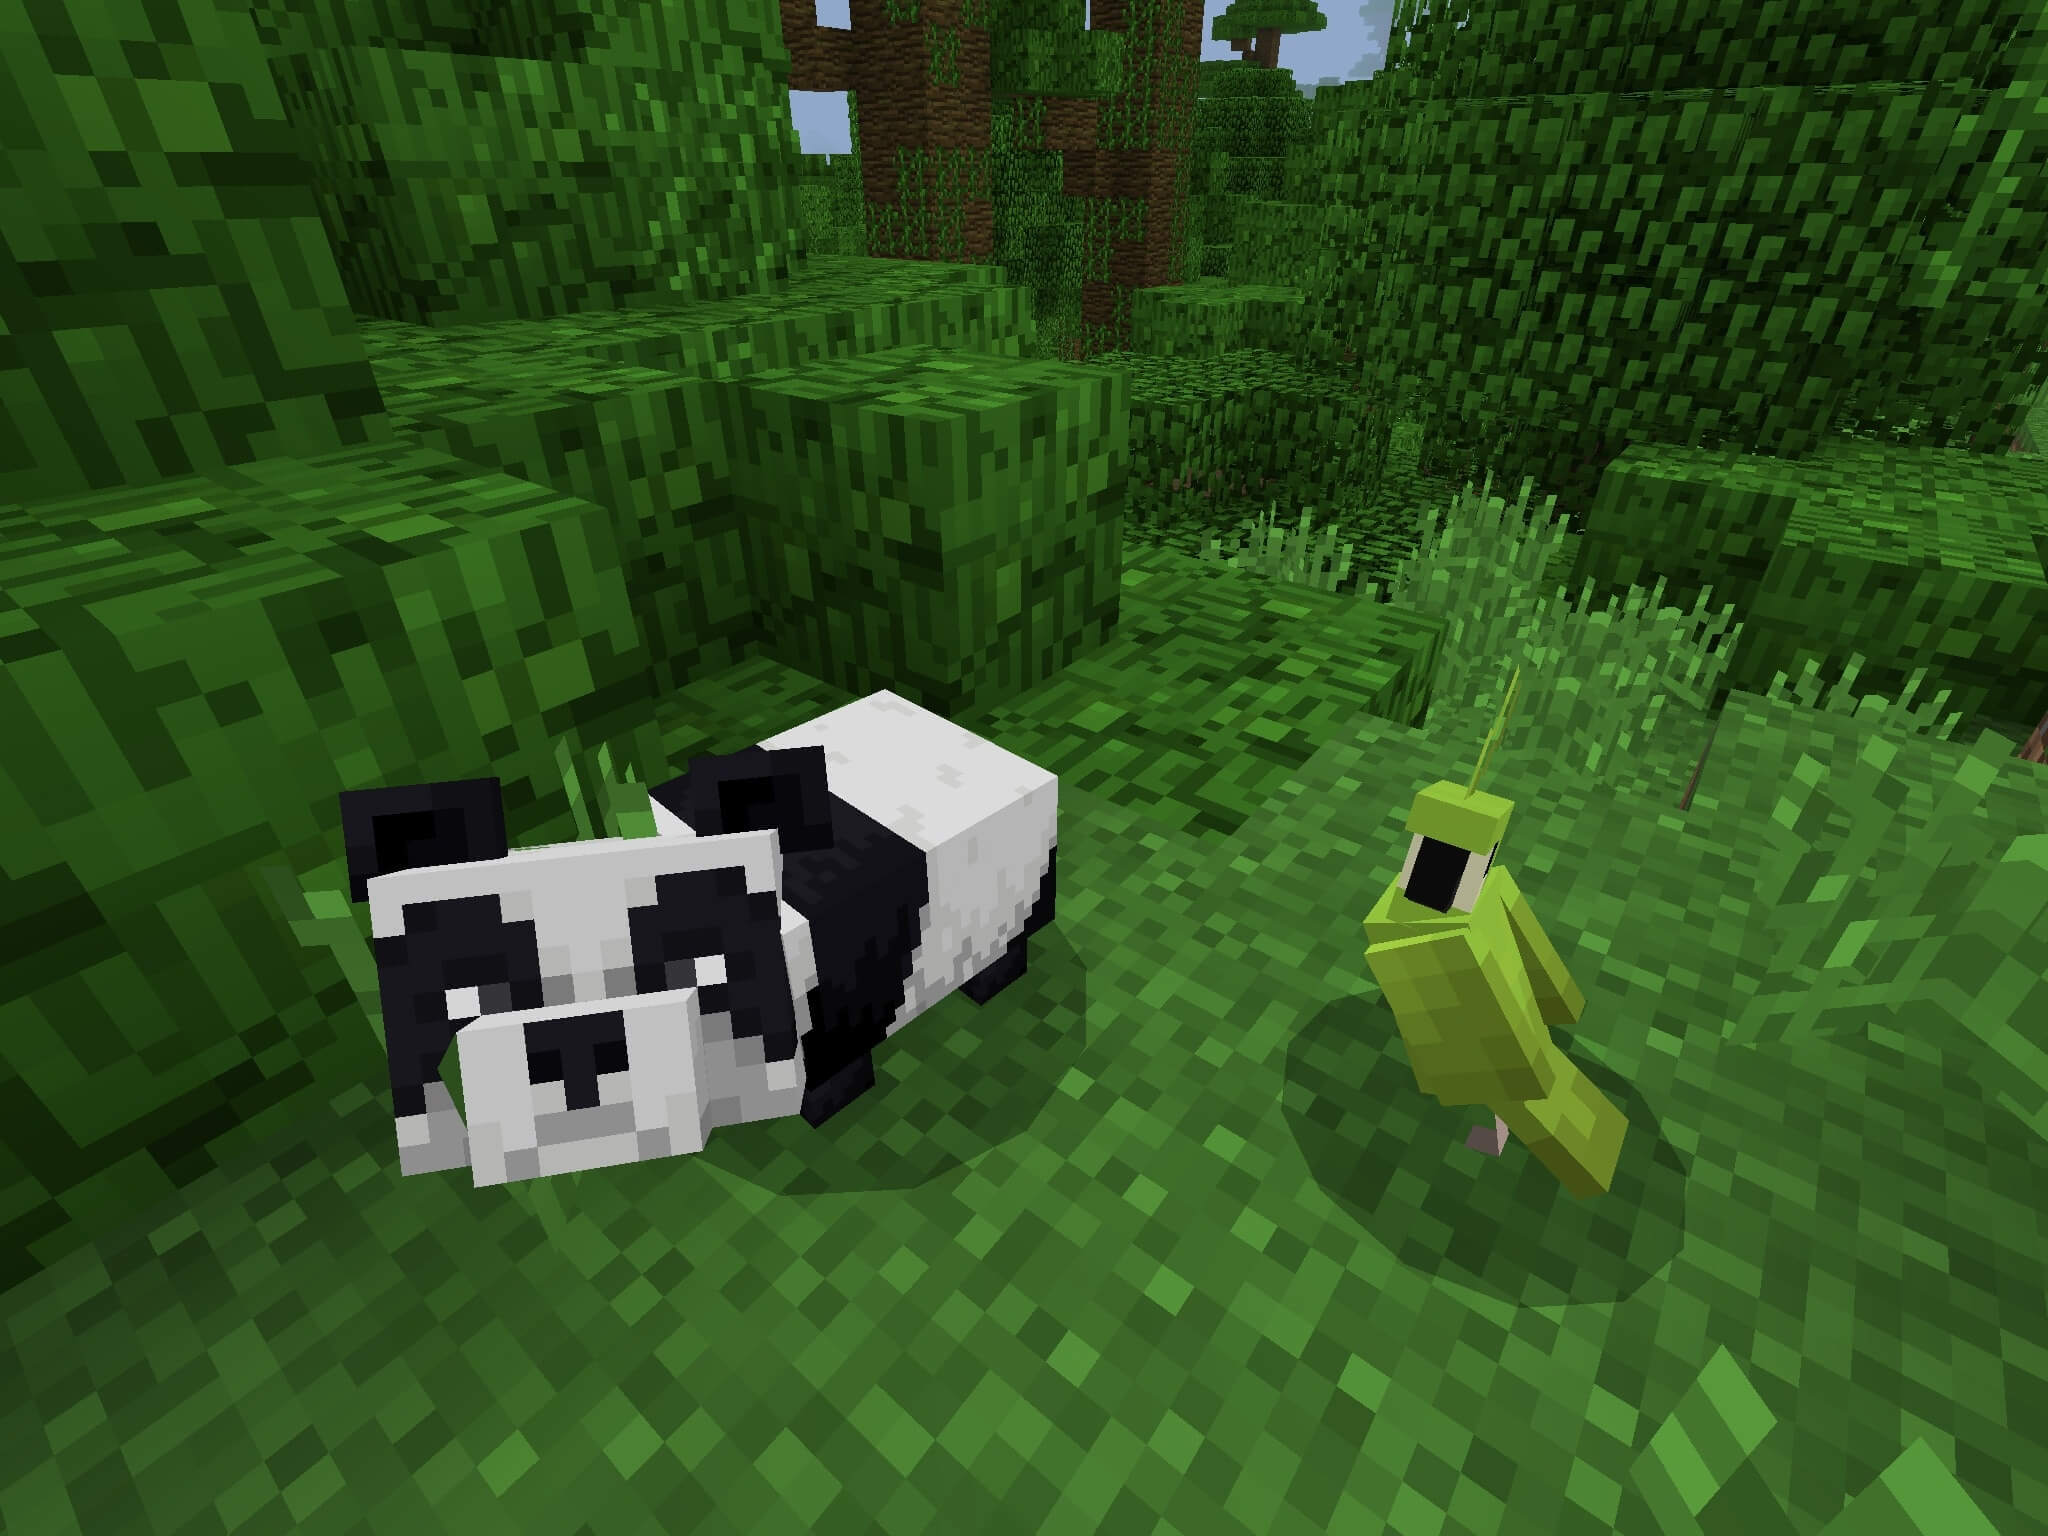 Minecraft Panda Seeds for Bedrock Edition